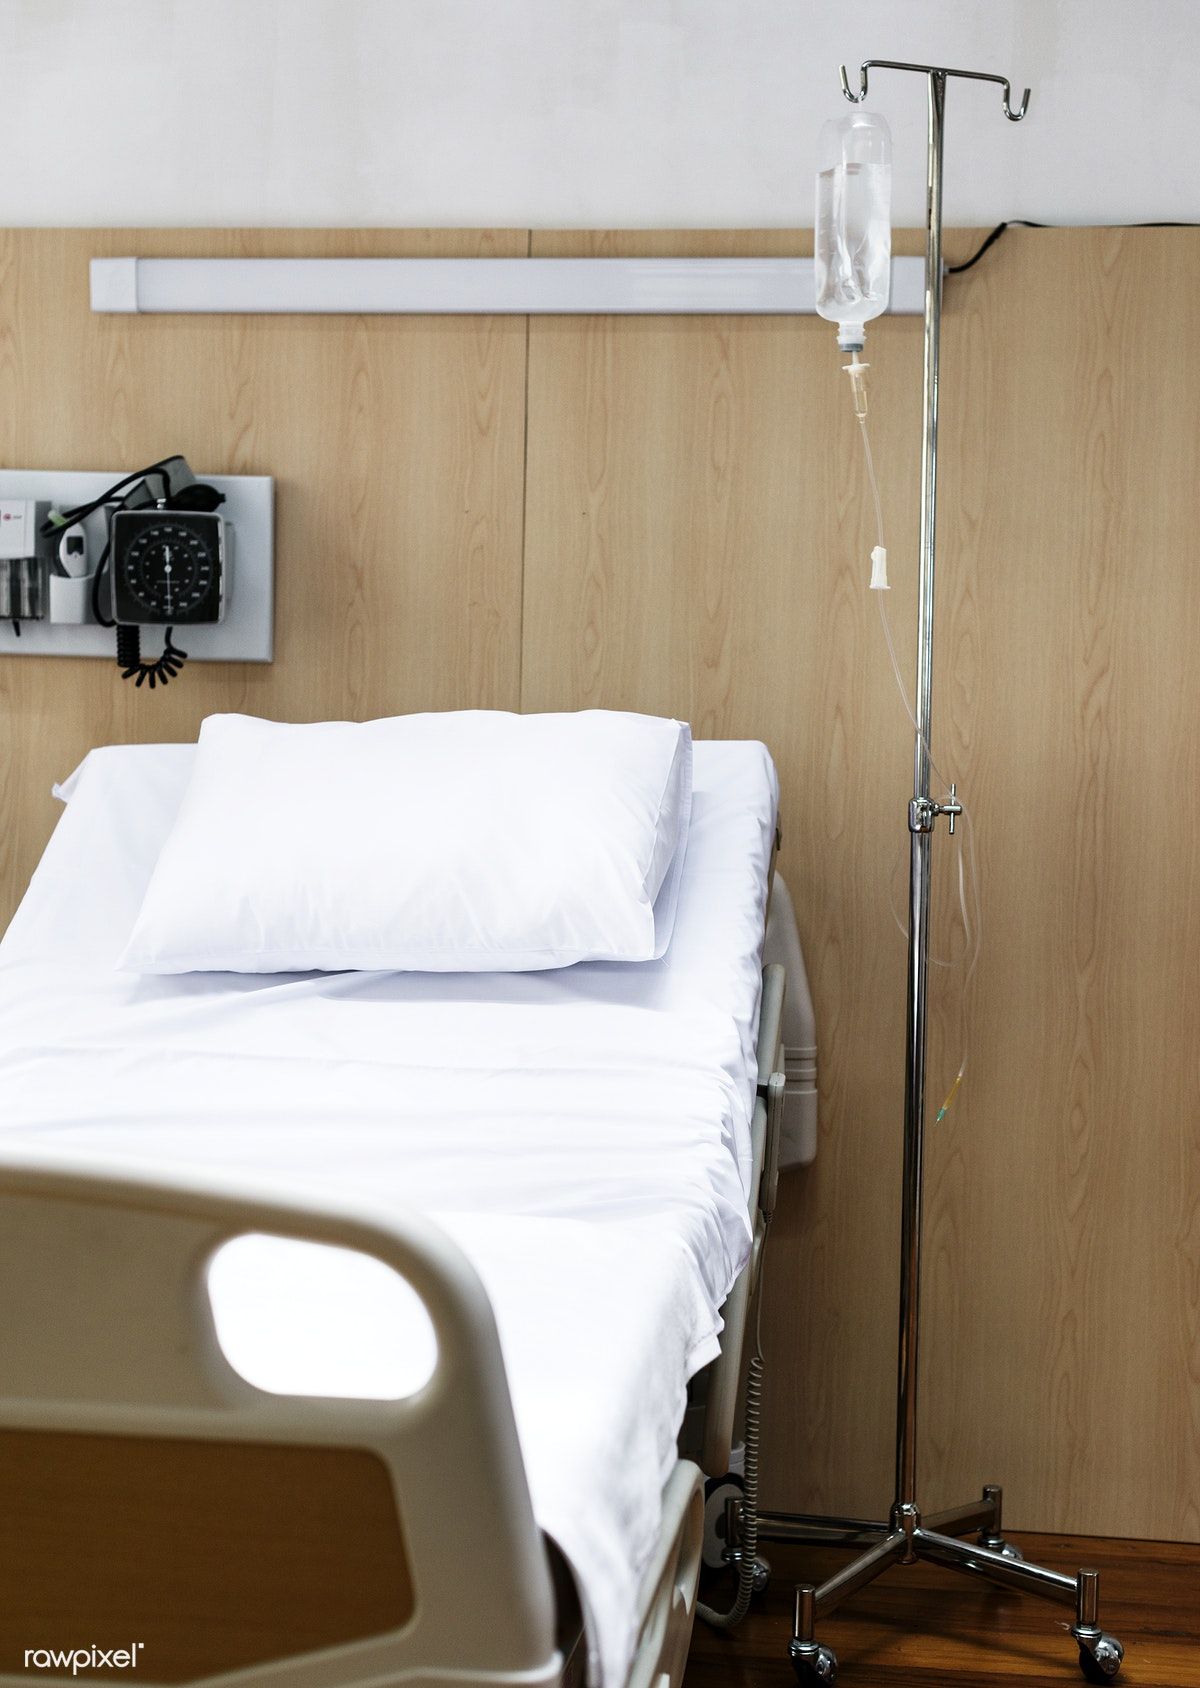 Download premium image of Hospital patient room 259665. Hospital